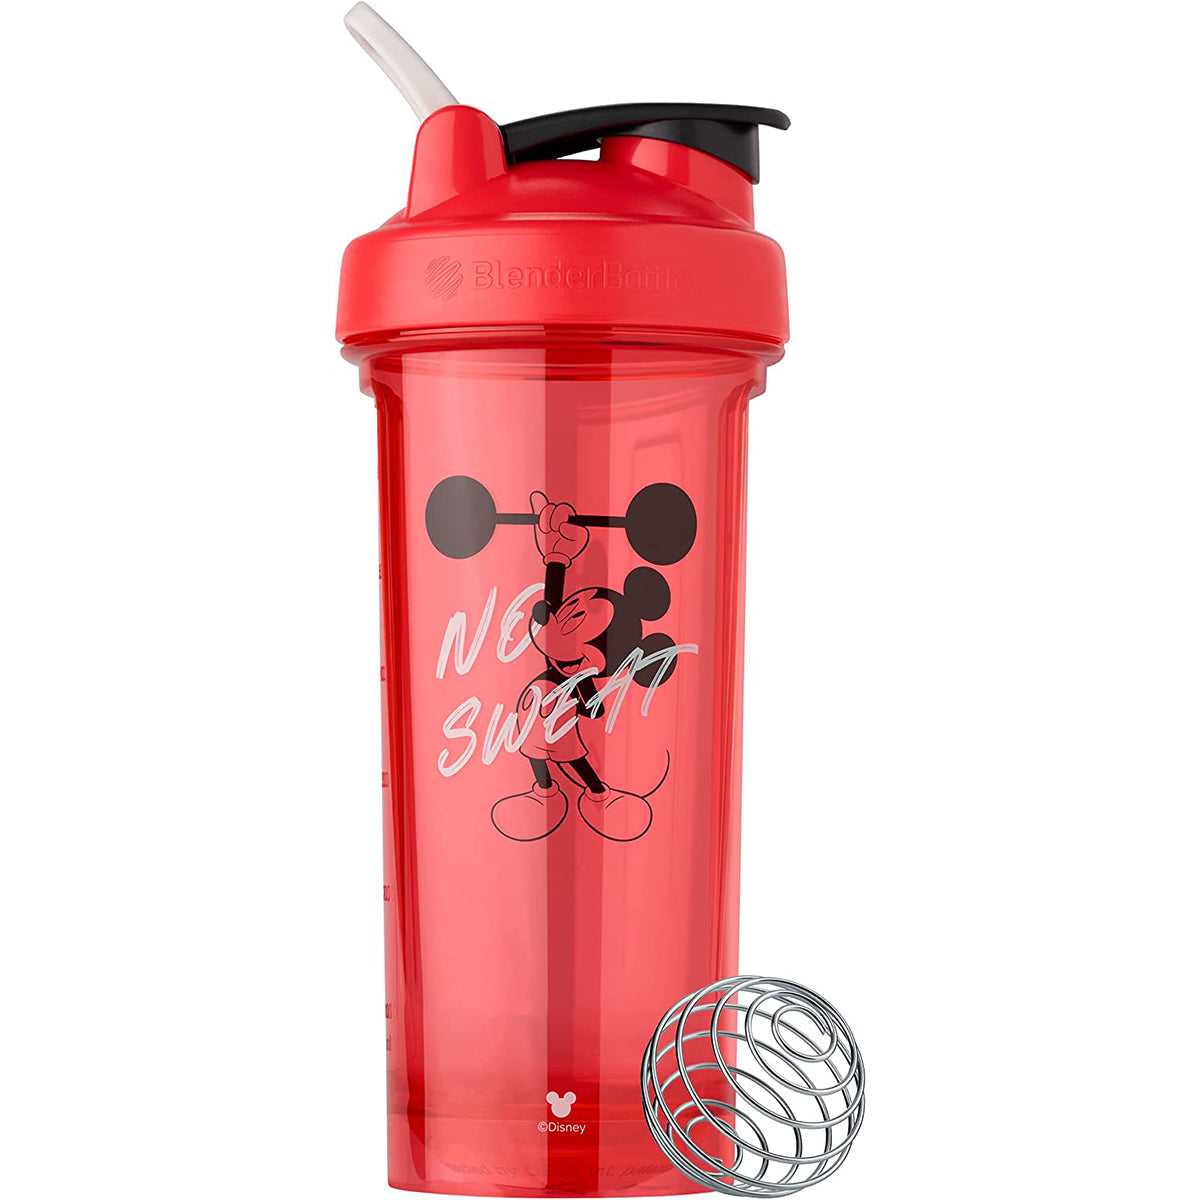 Blender Bottle Pro Series 28 oz. Mickey and Minnie Shaker Mixer Cup w/ Loop Top Blender Bottle